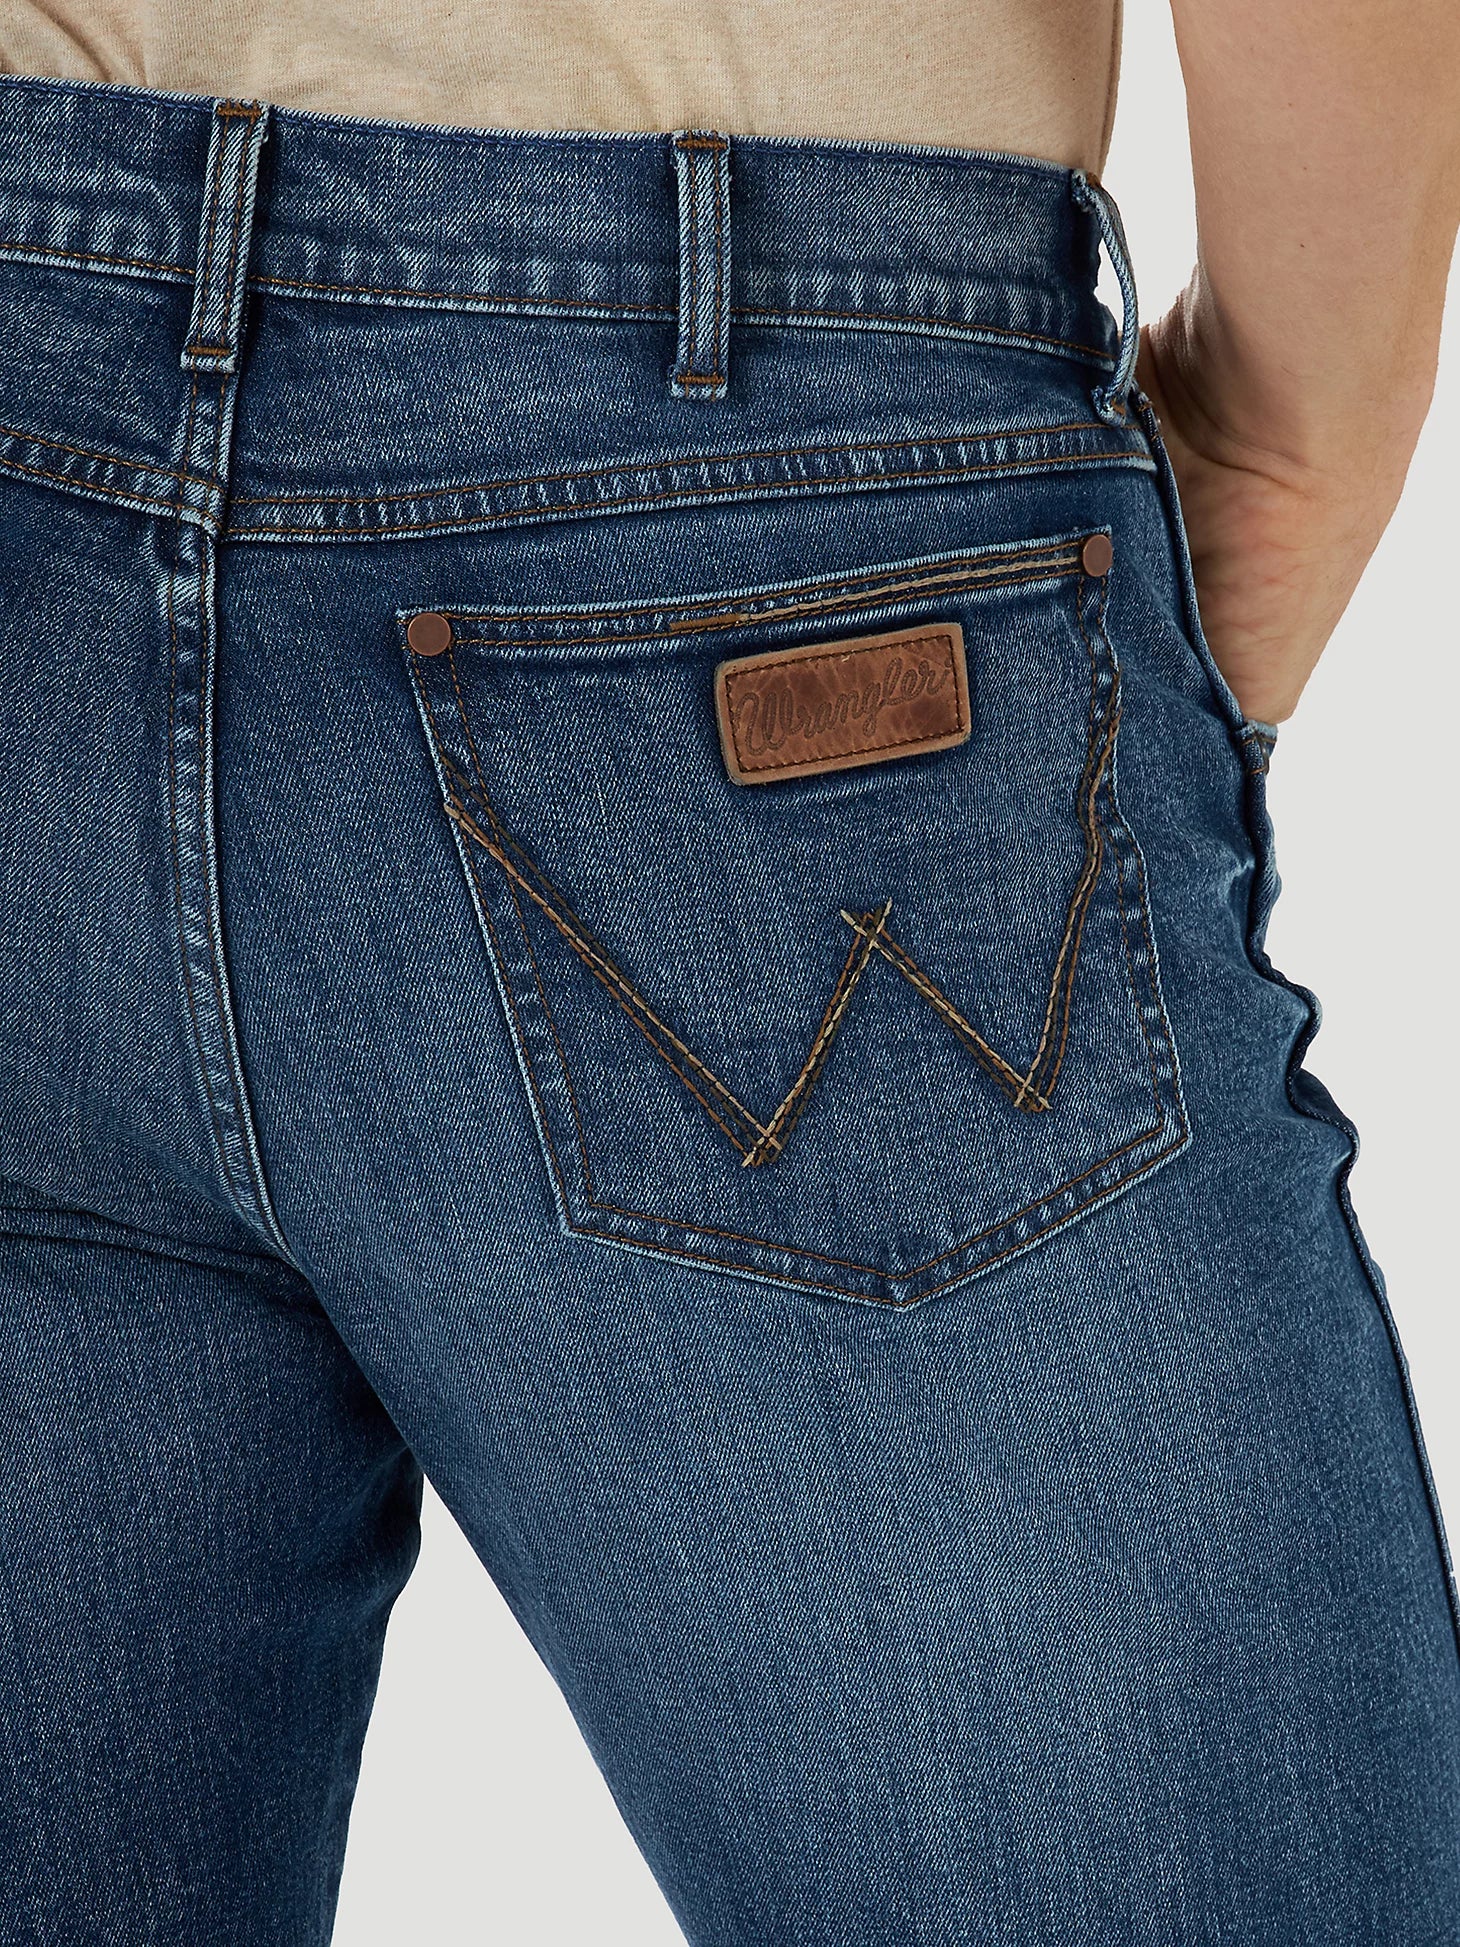 Wrangler Men's Retro Slim-Fit Bootcut Jeans